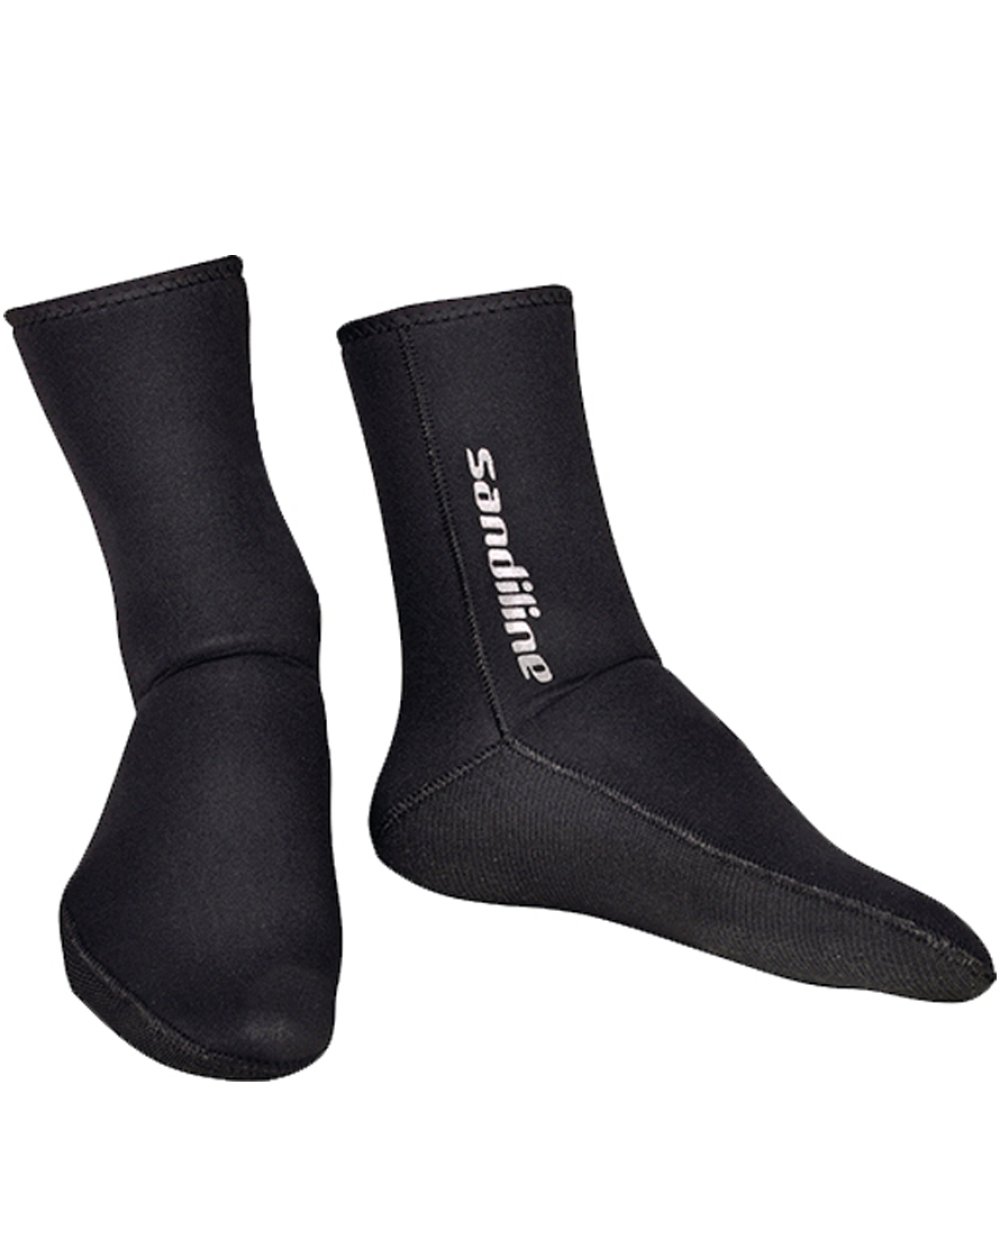 SANDILINE Socks Splash 30 - Gr. 38/39